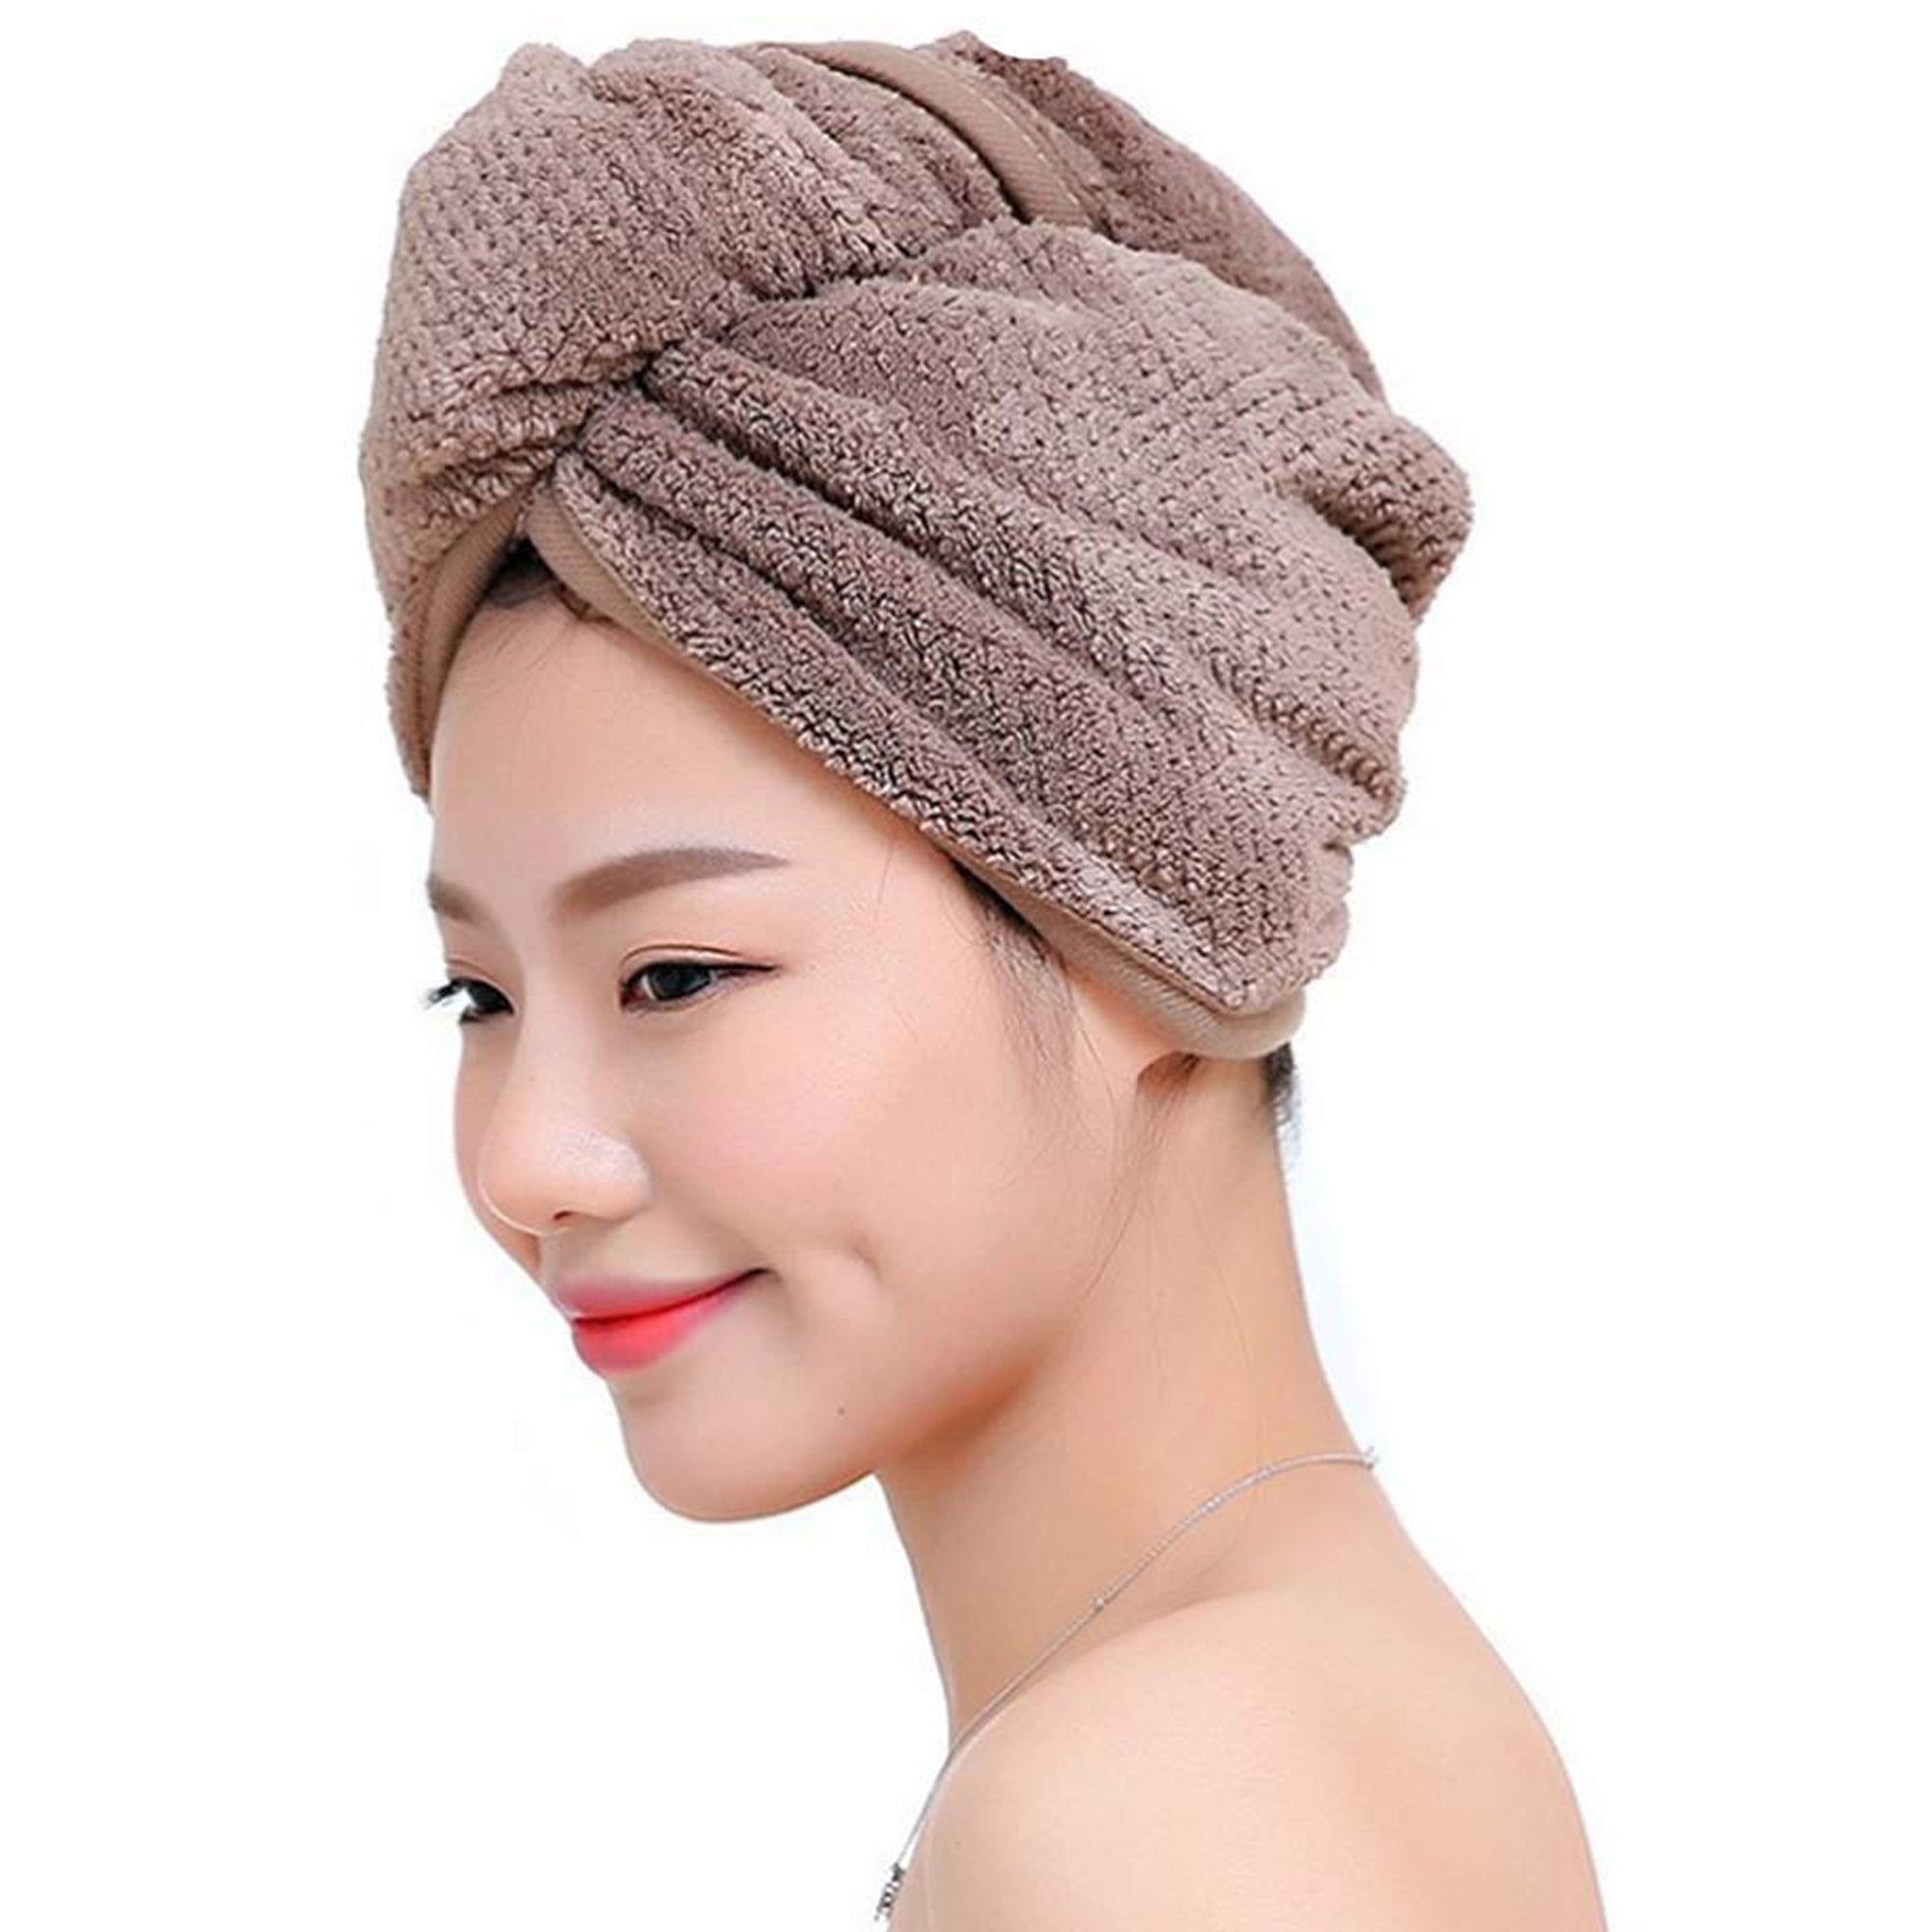 NEW Quick Dry Magic Hair Turban Microfibre Towel Wrap Cap Hat Bath Shower 2020